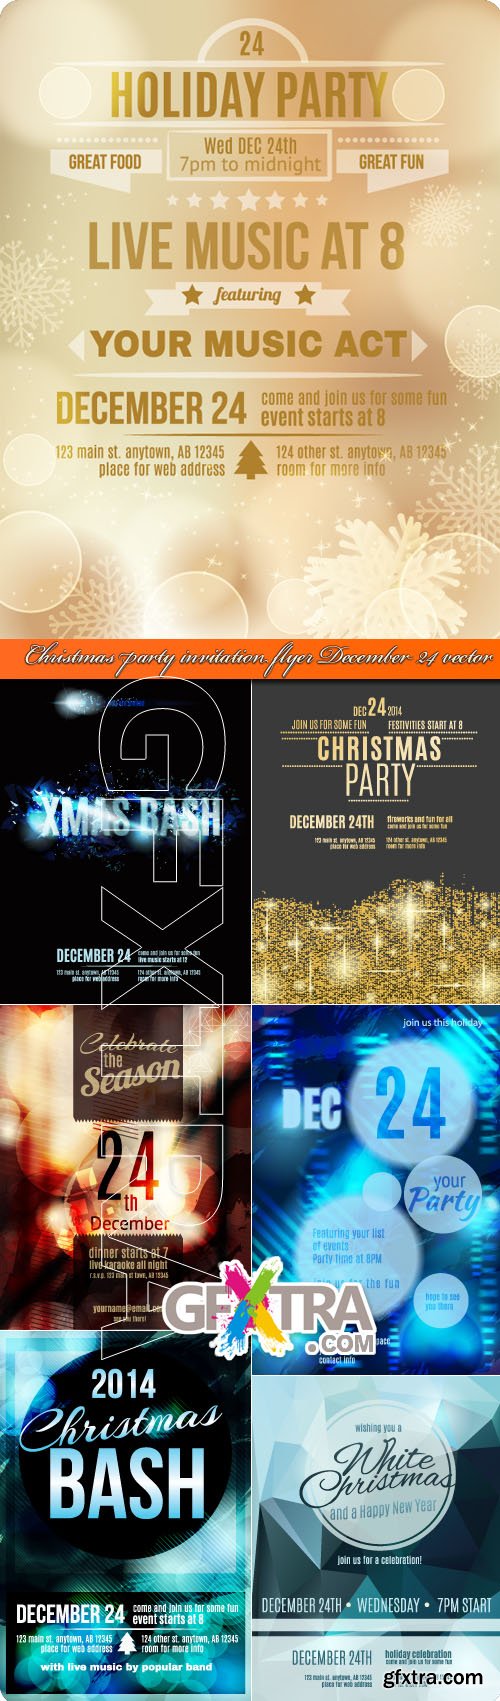 Christmas party invitation flyer December 24 vector